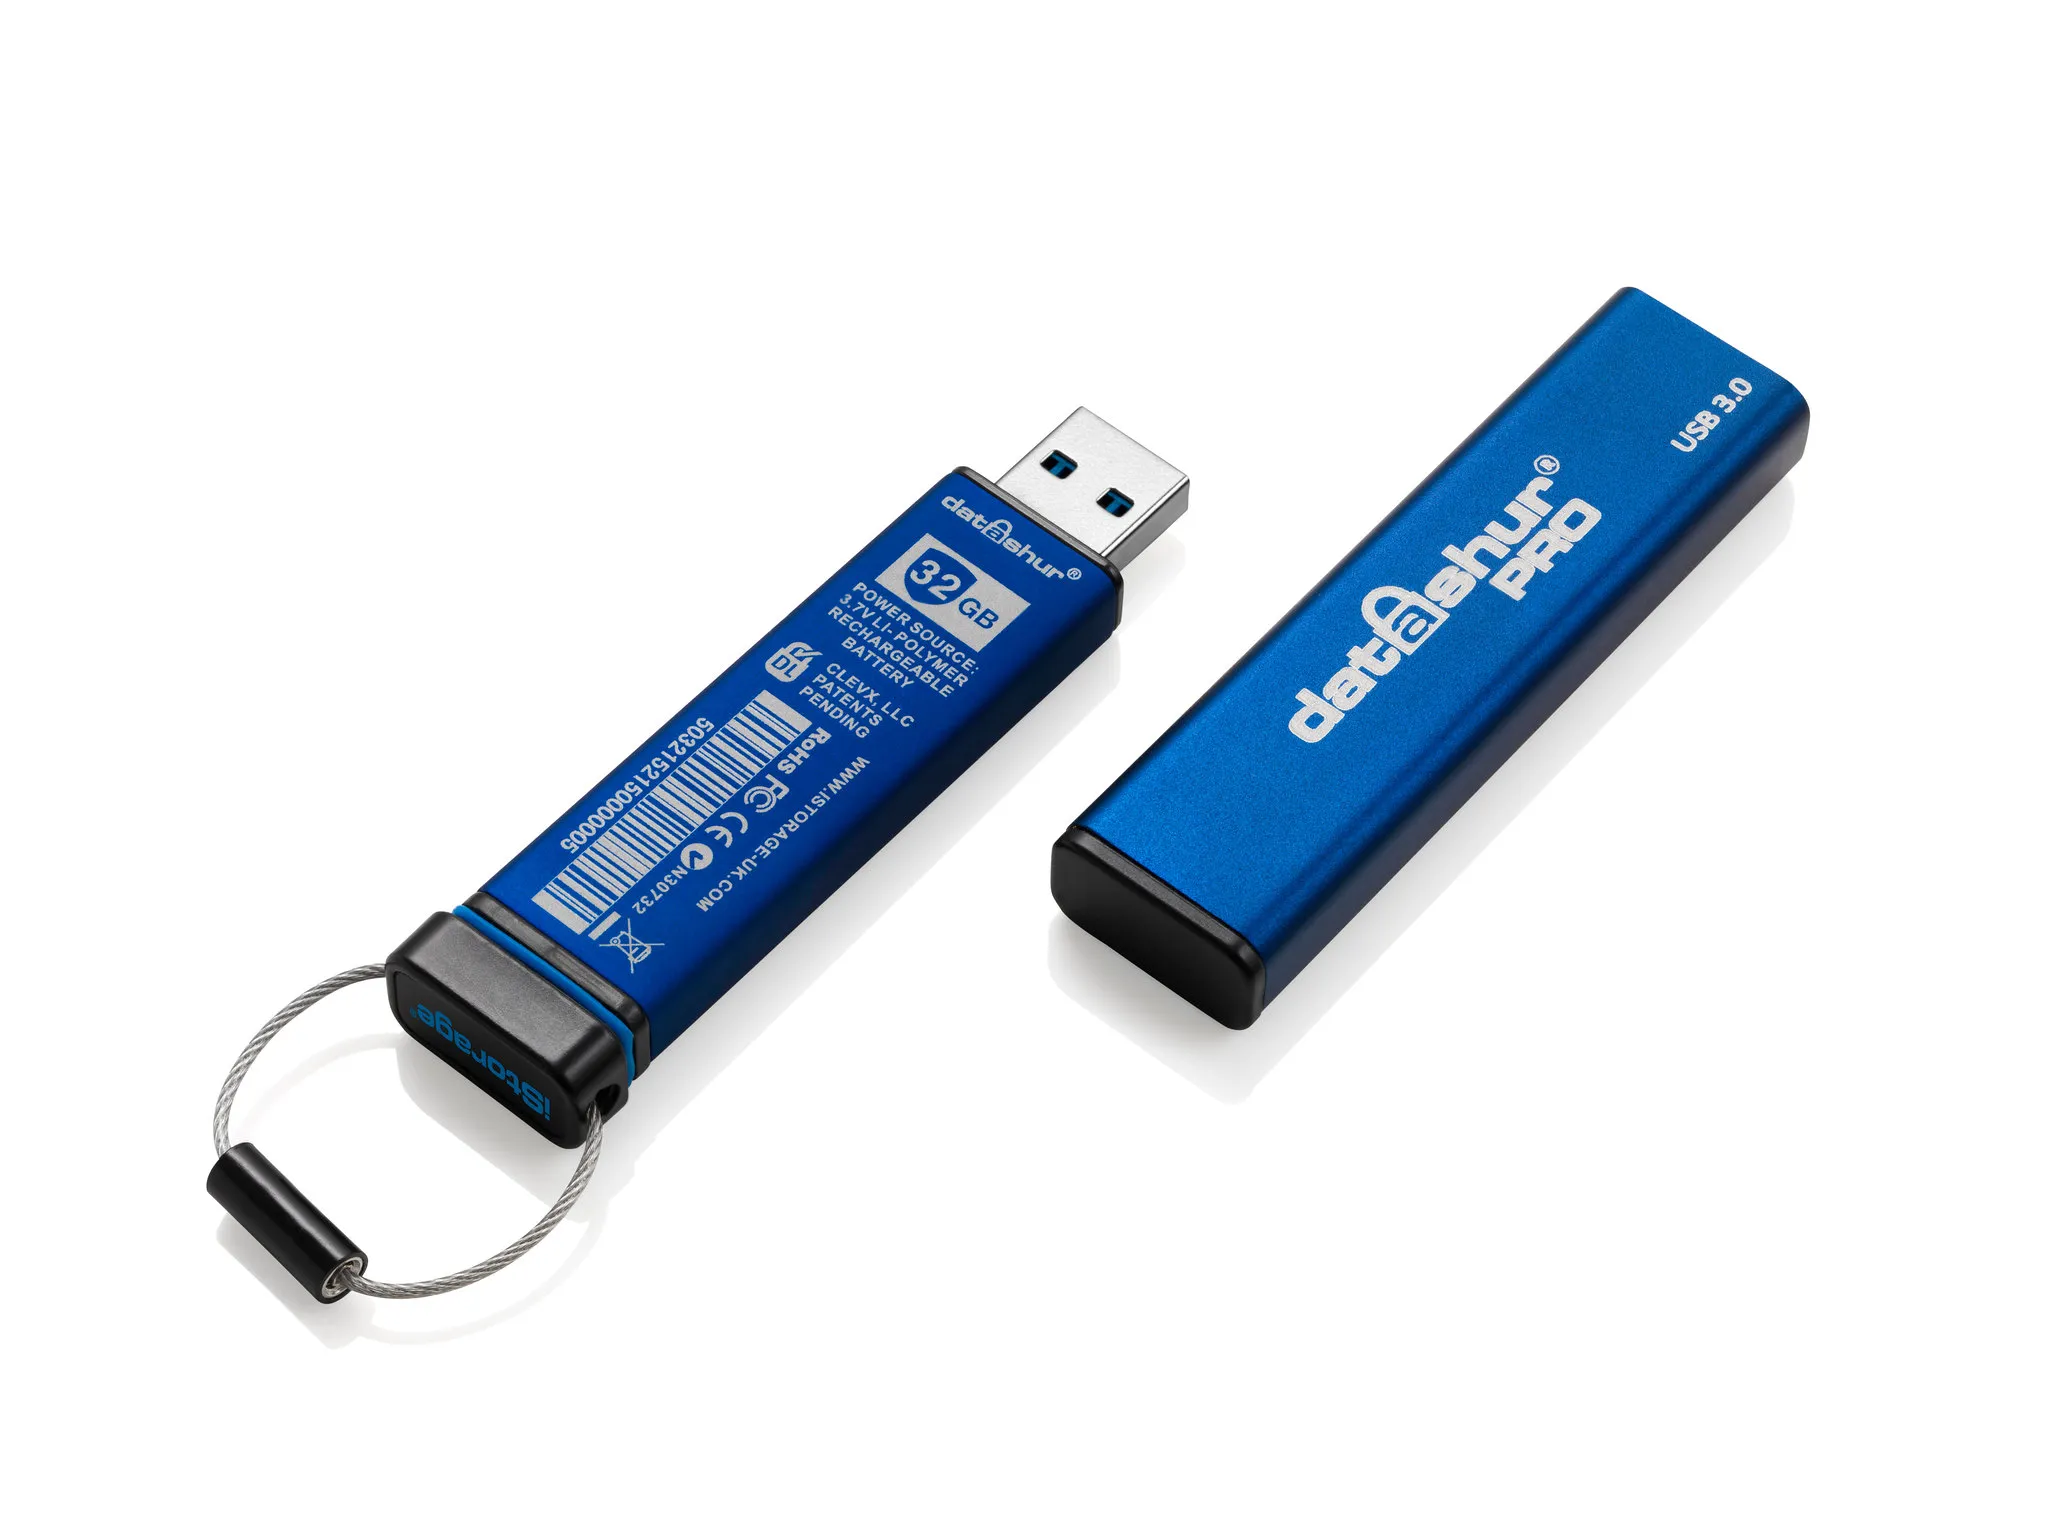 Vente iStorage datAshur Pro USB3 256-bit 32GB iStorage au meilleur prix - visuel 8